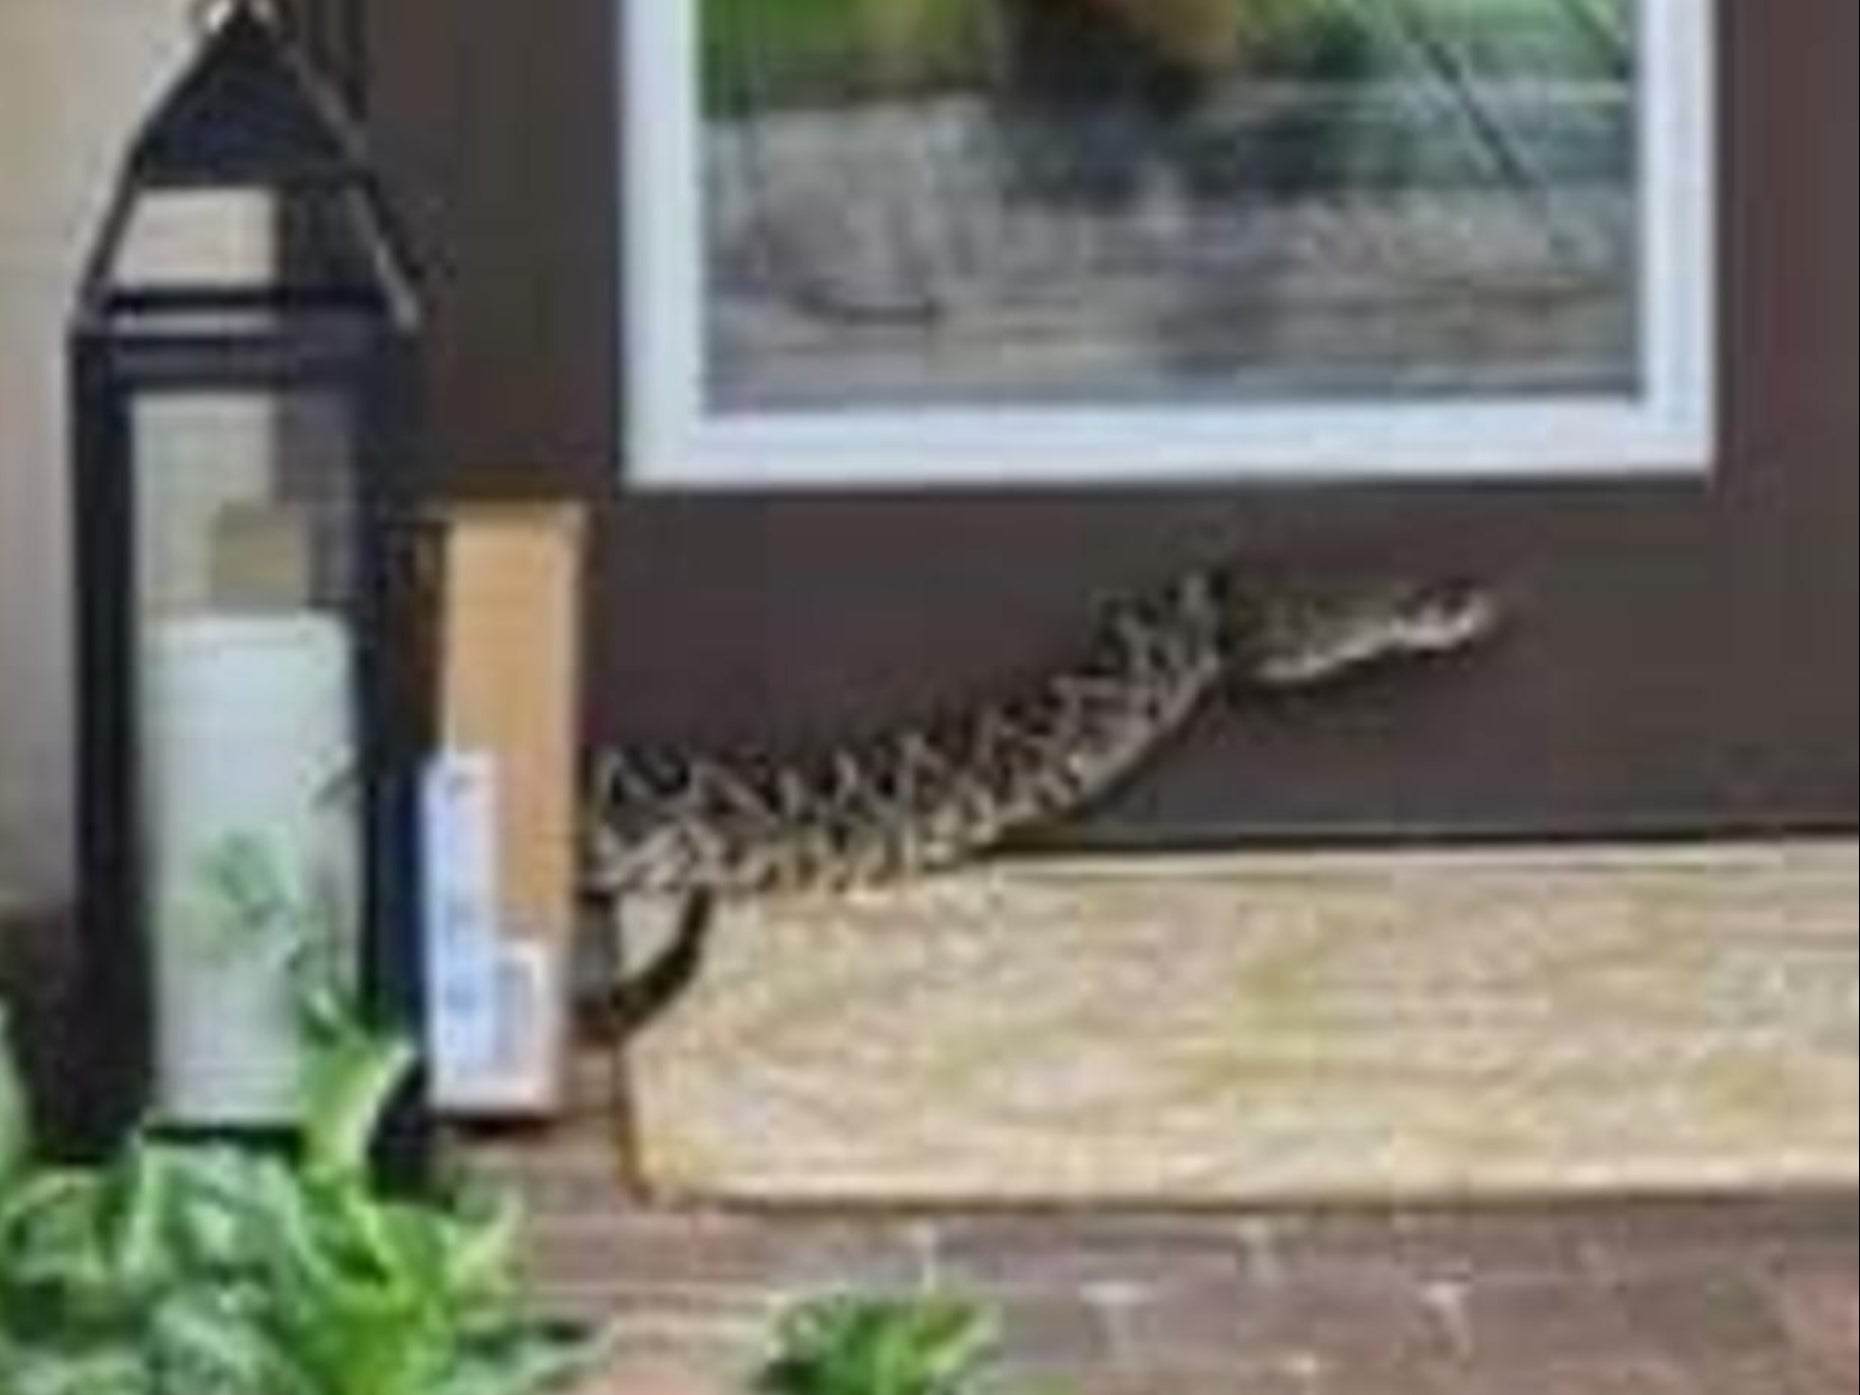 An Eastern Diamondback rattlesnake bit an Amazon delivery driver in Florida